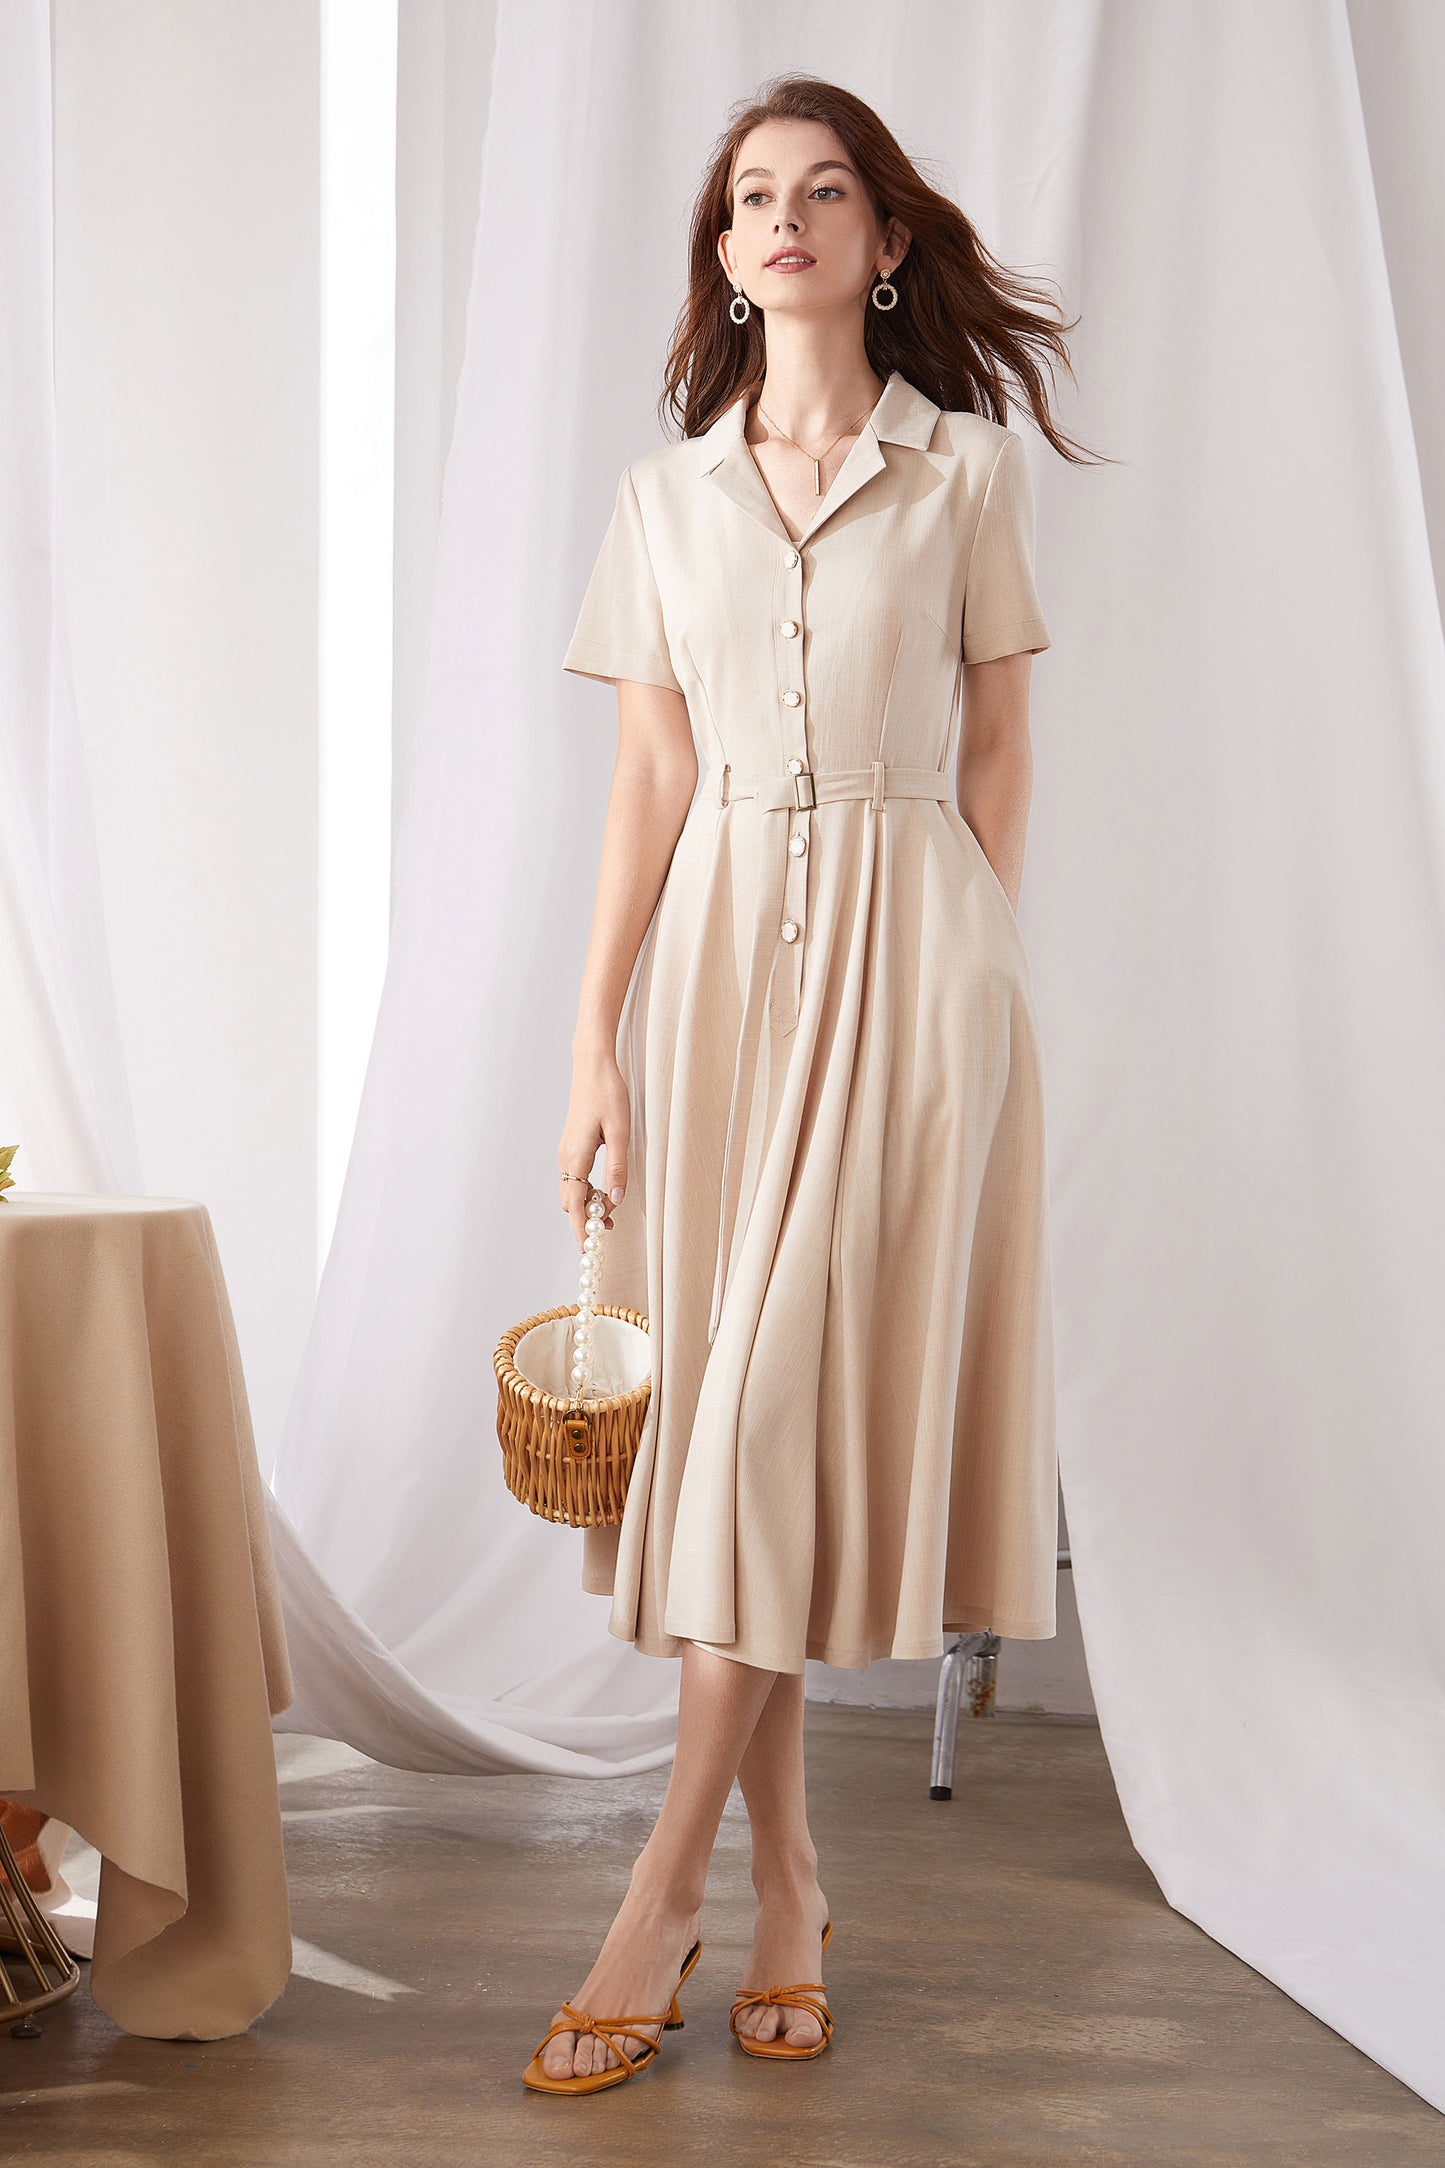 Summer Short Sleeve Waist Dress In Beige  3375#